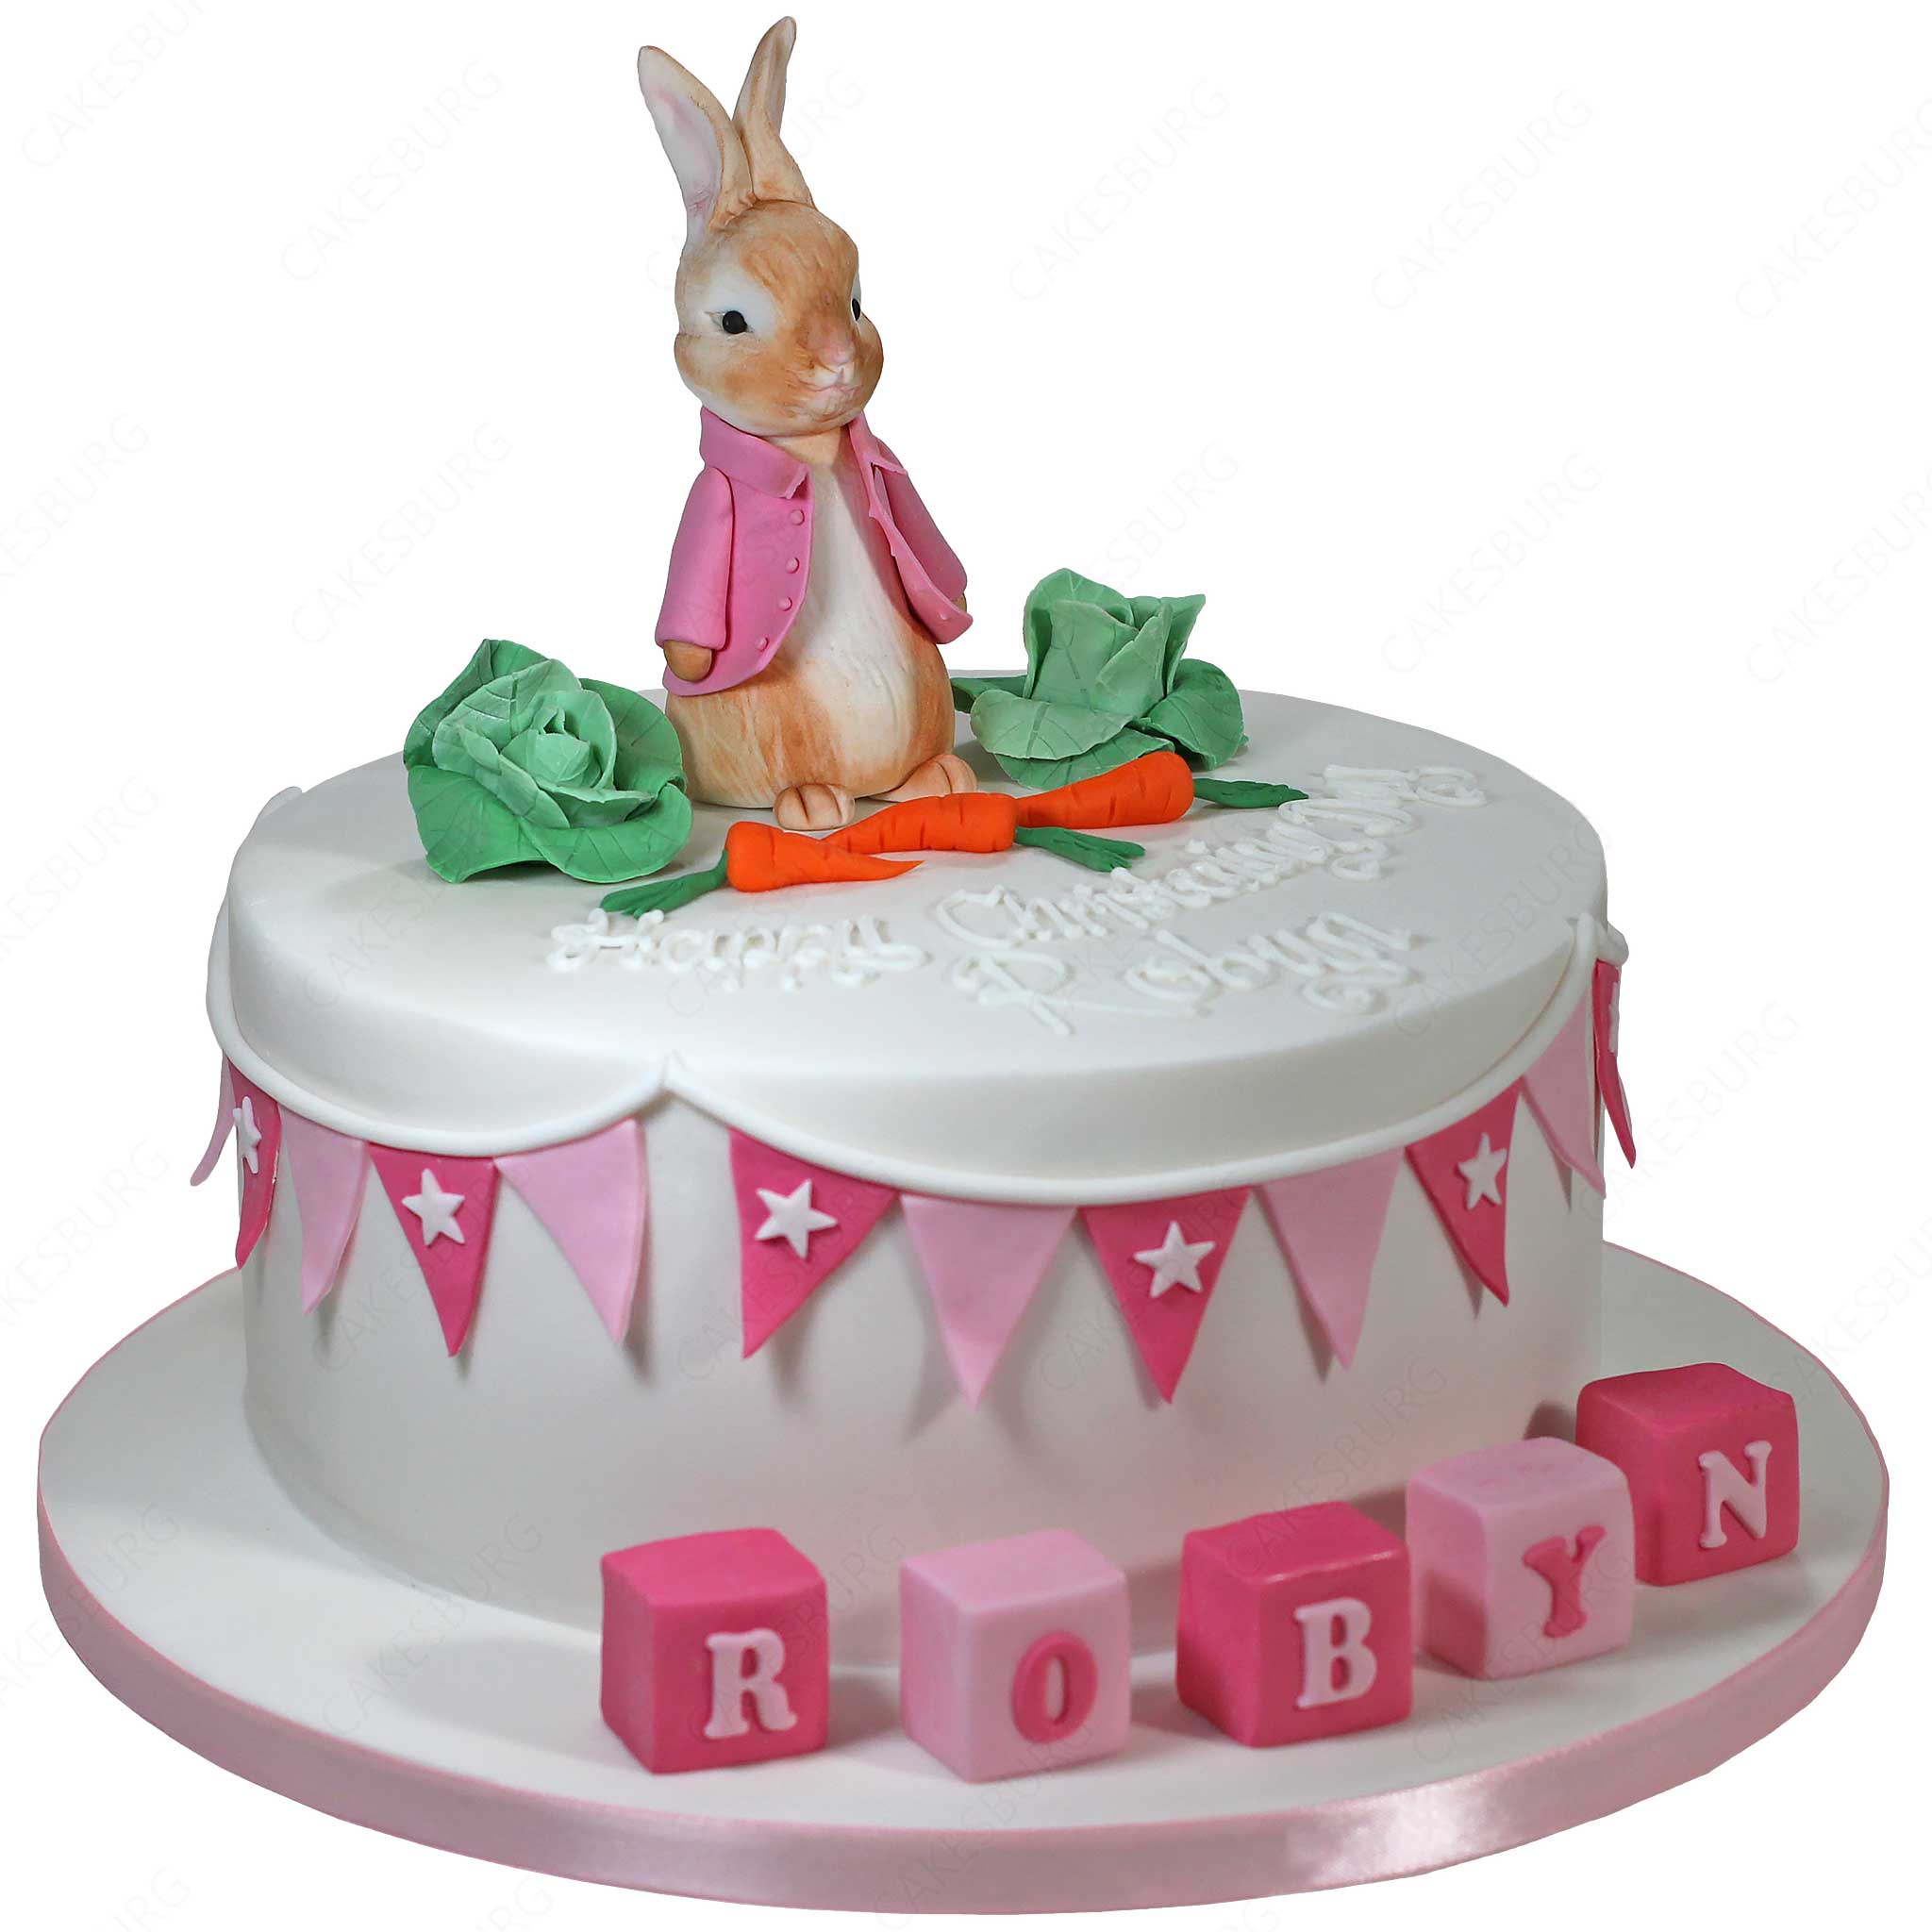 Peter Rabbit | Outrageous Cakes